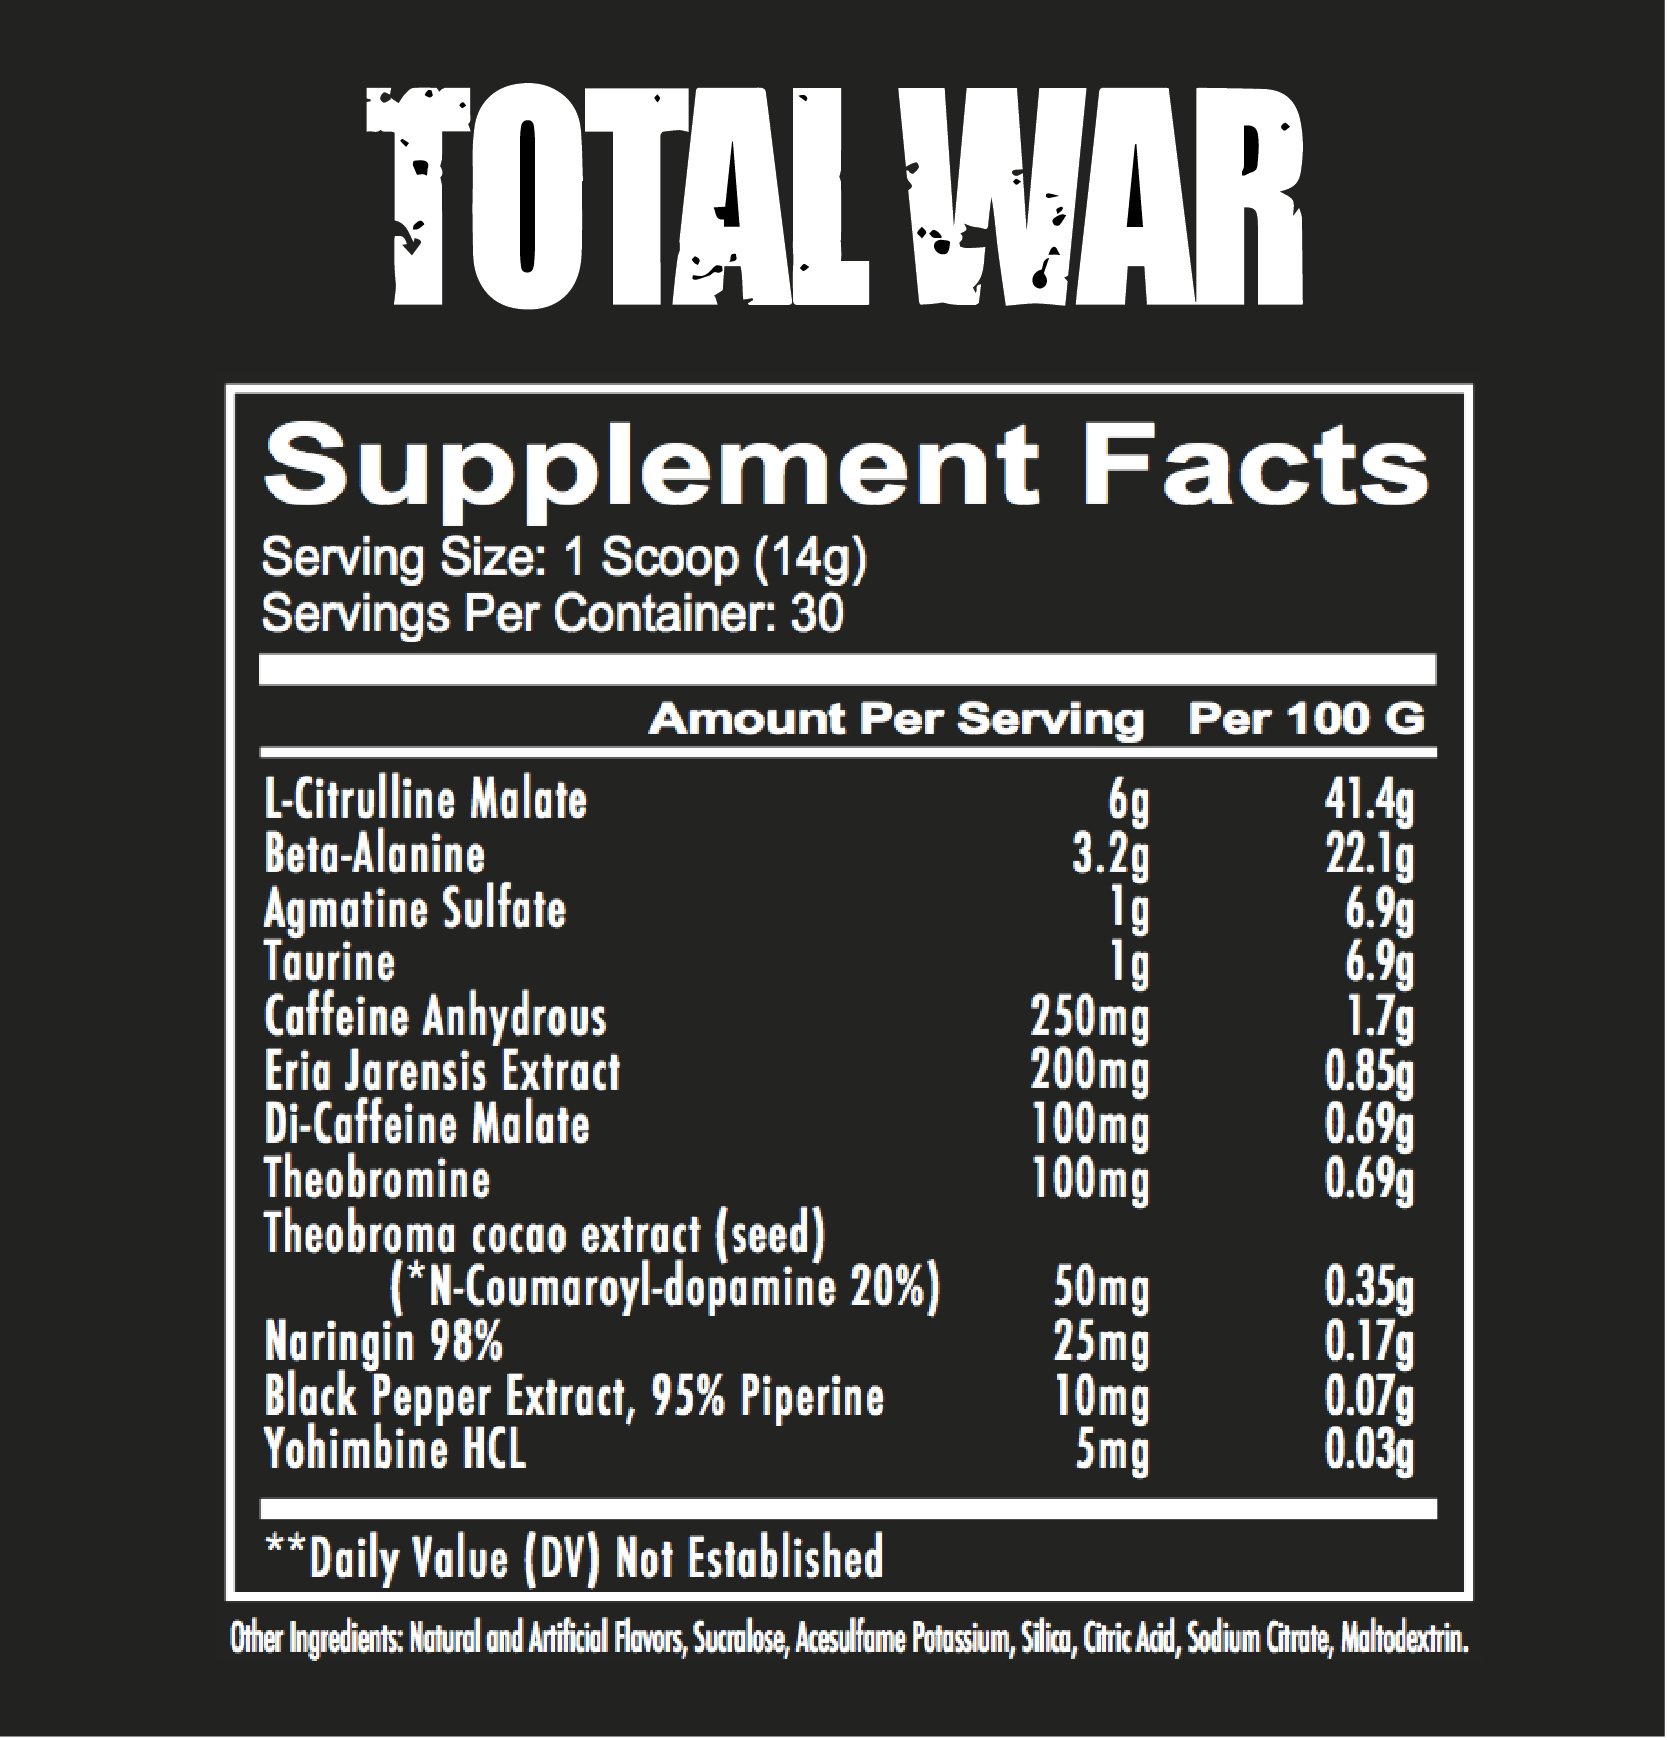 redcon1 total war ingredients january 2018